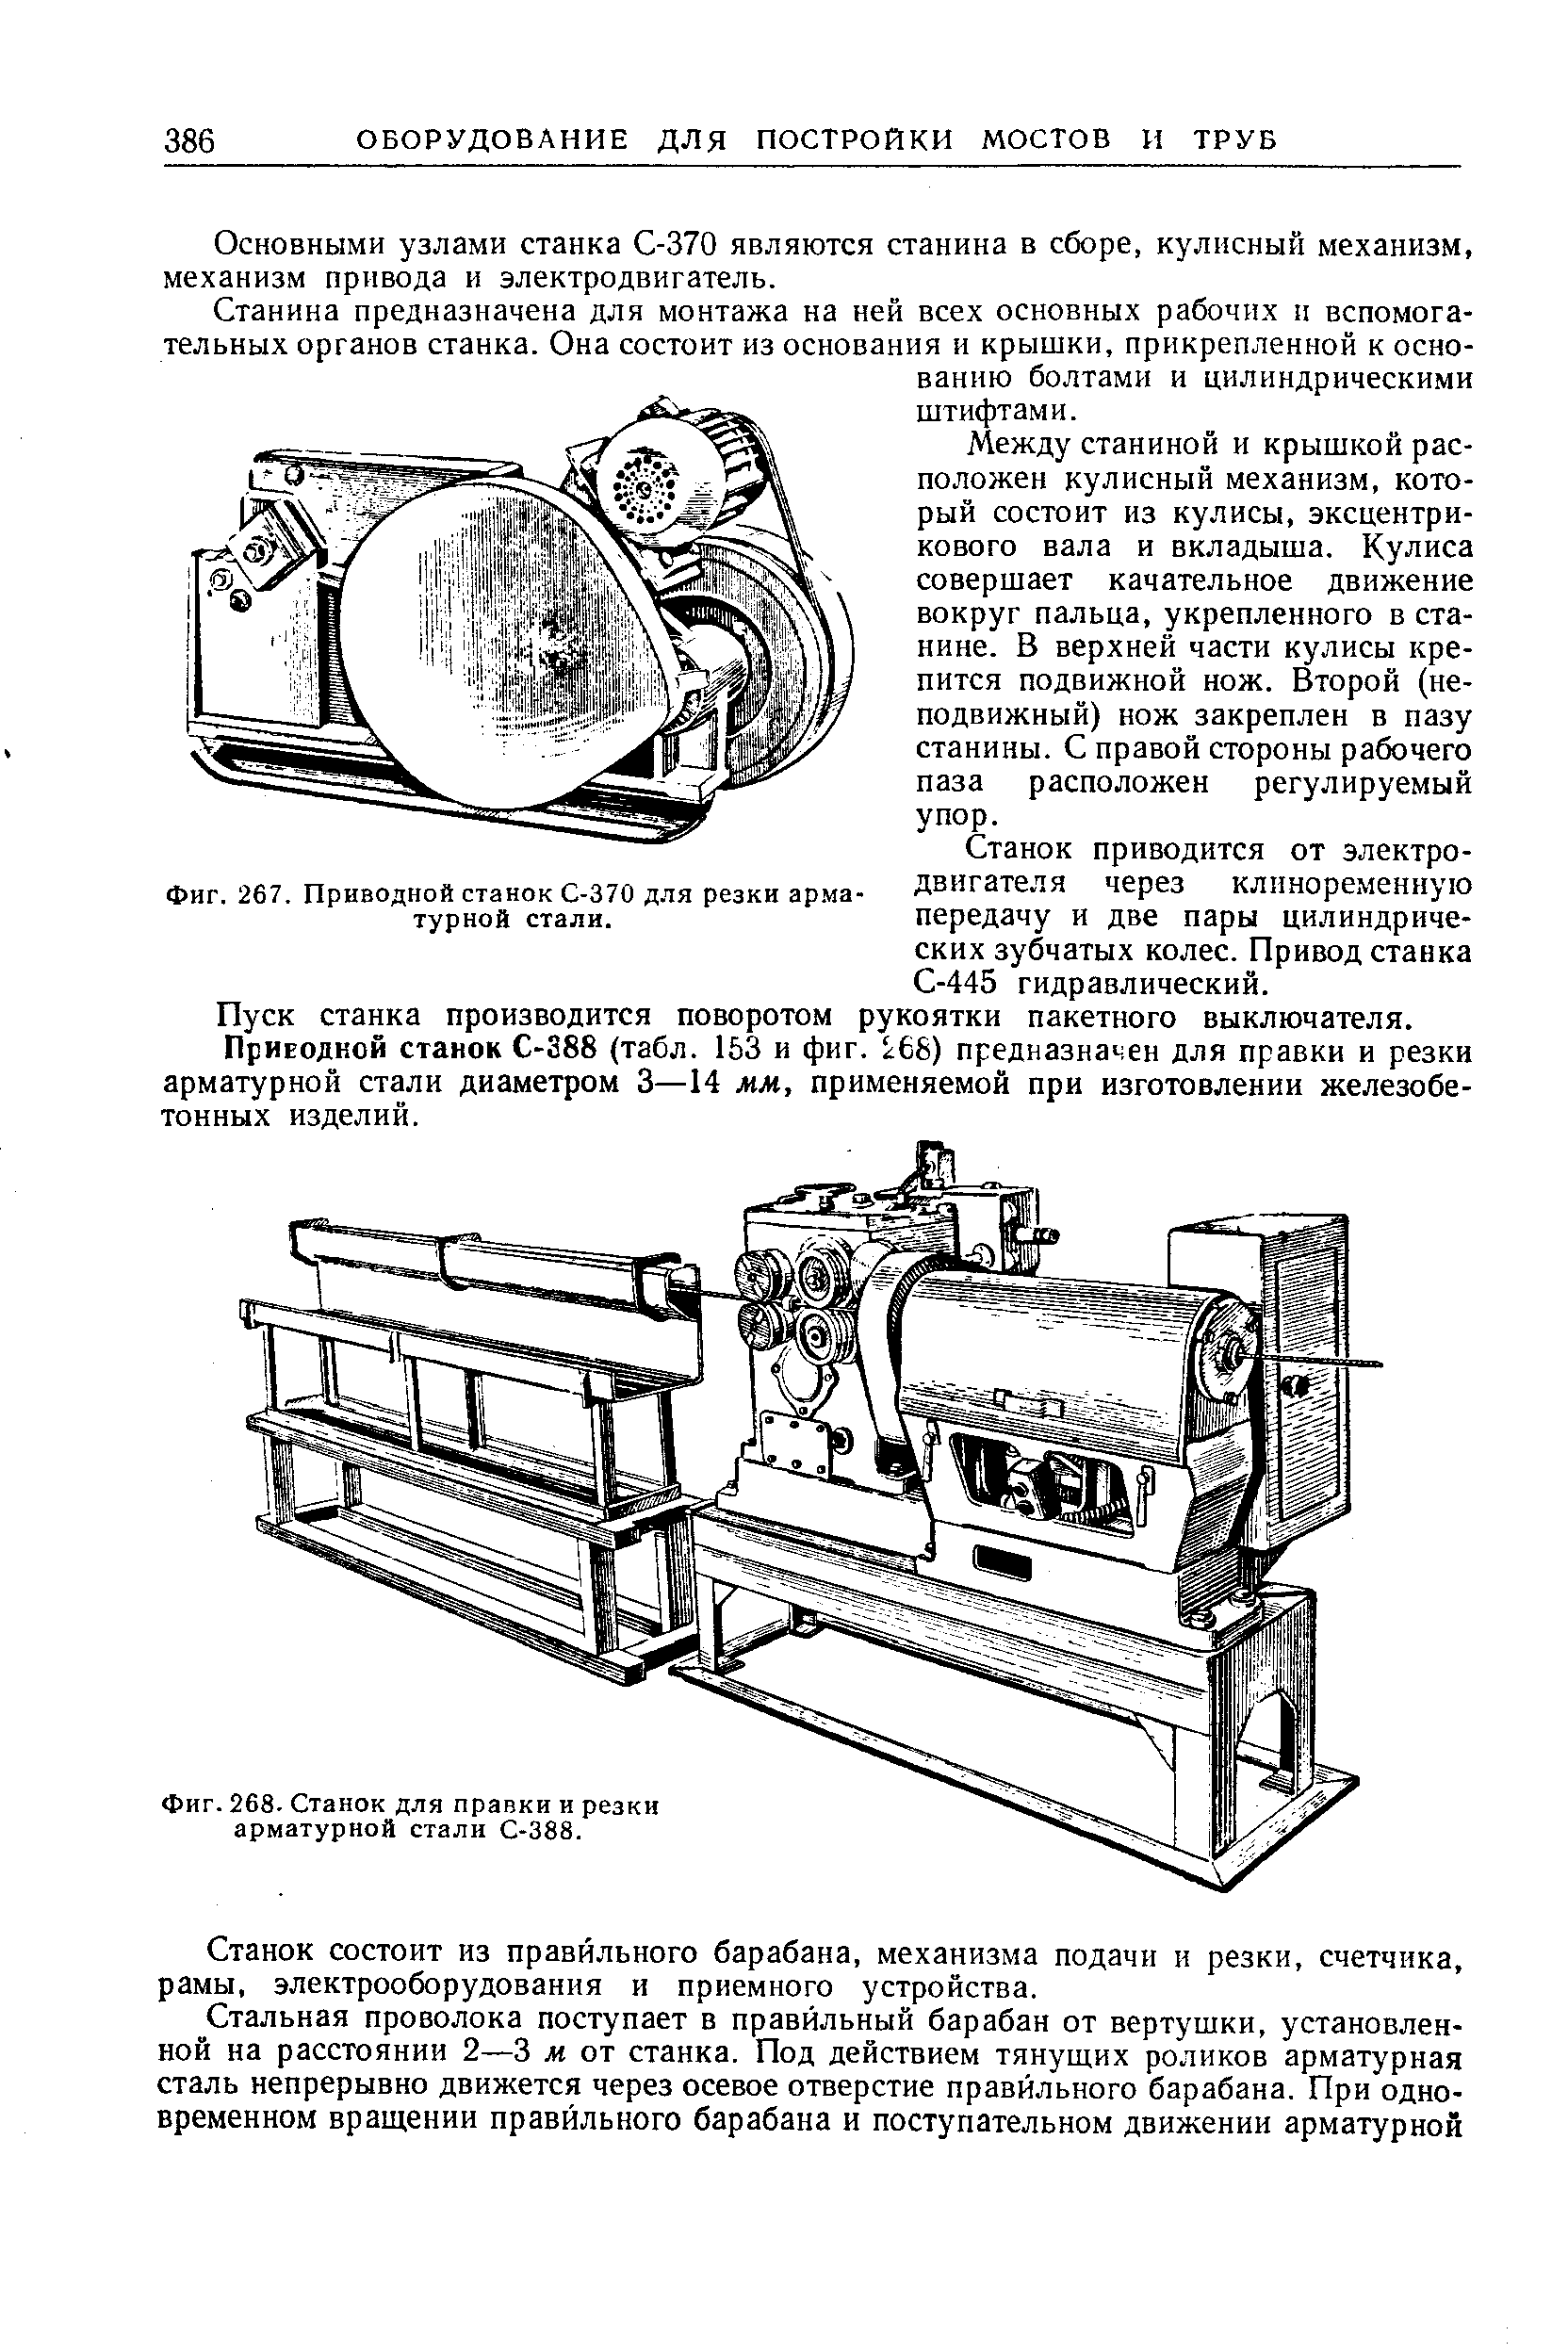 Автомат для плавки и резки арматурной стали h1226 г